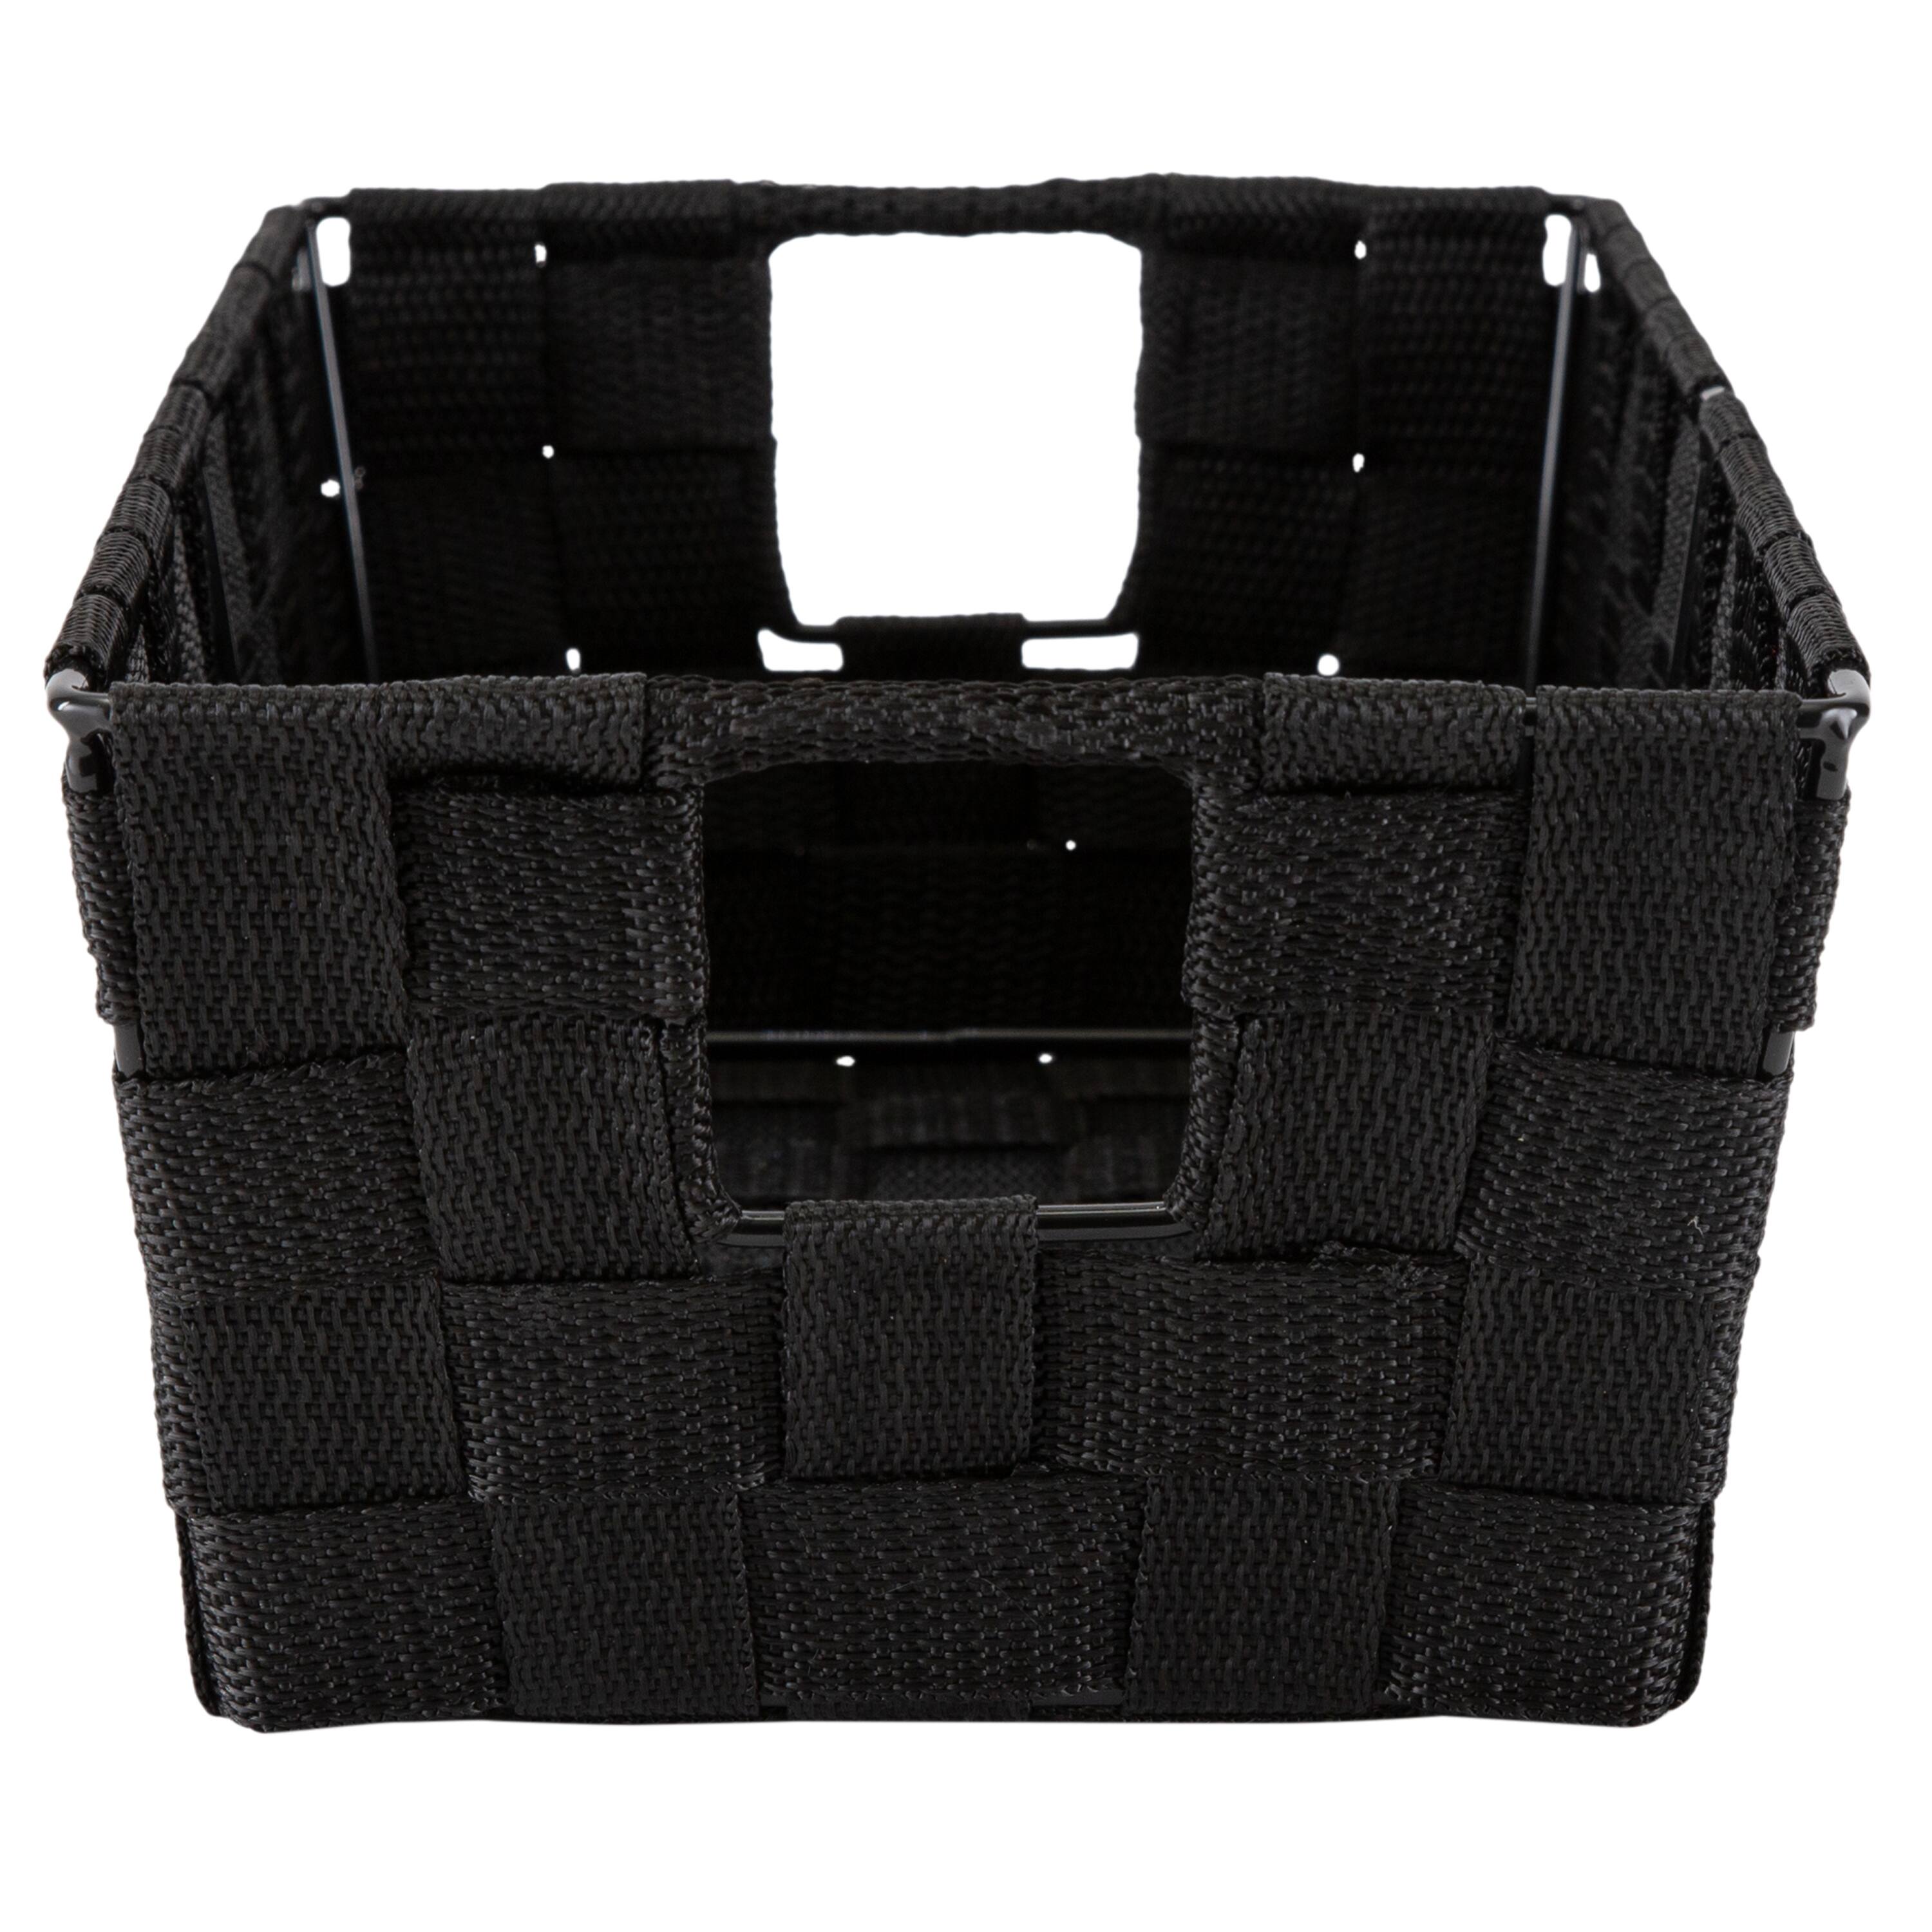 Simplify Small Black Woven Storage Shelf Baskets, 2ct.